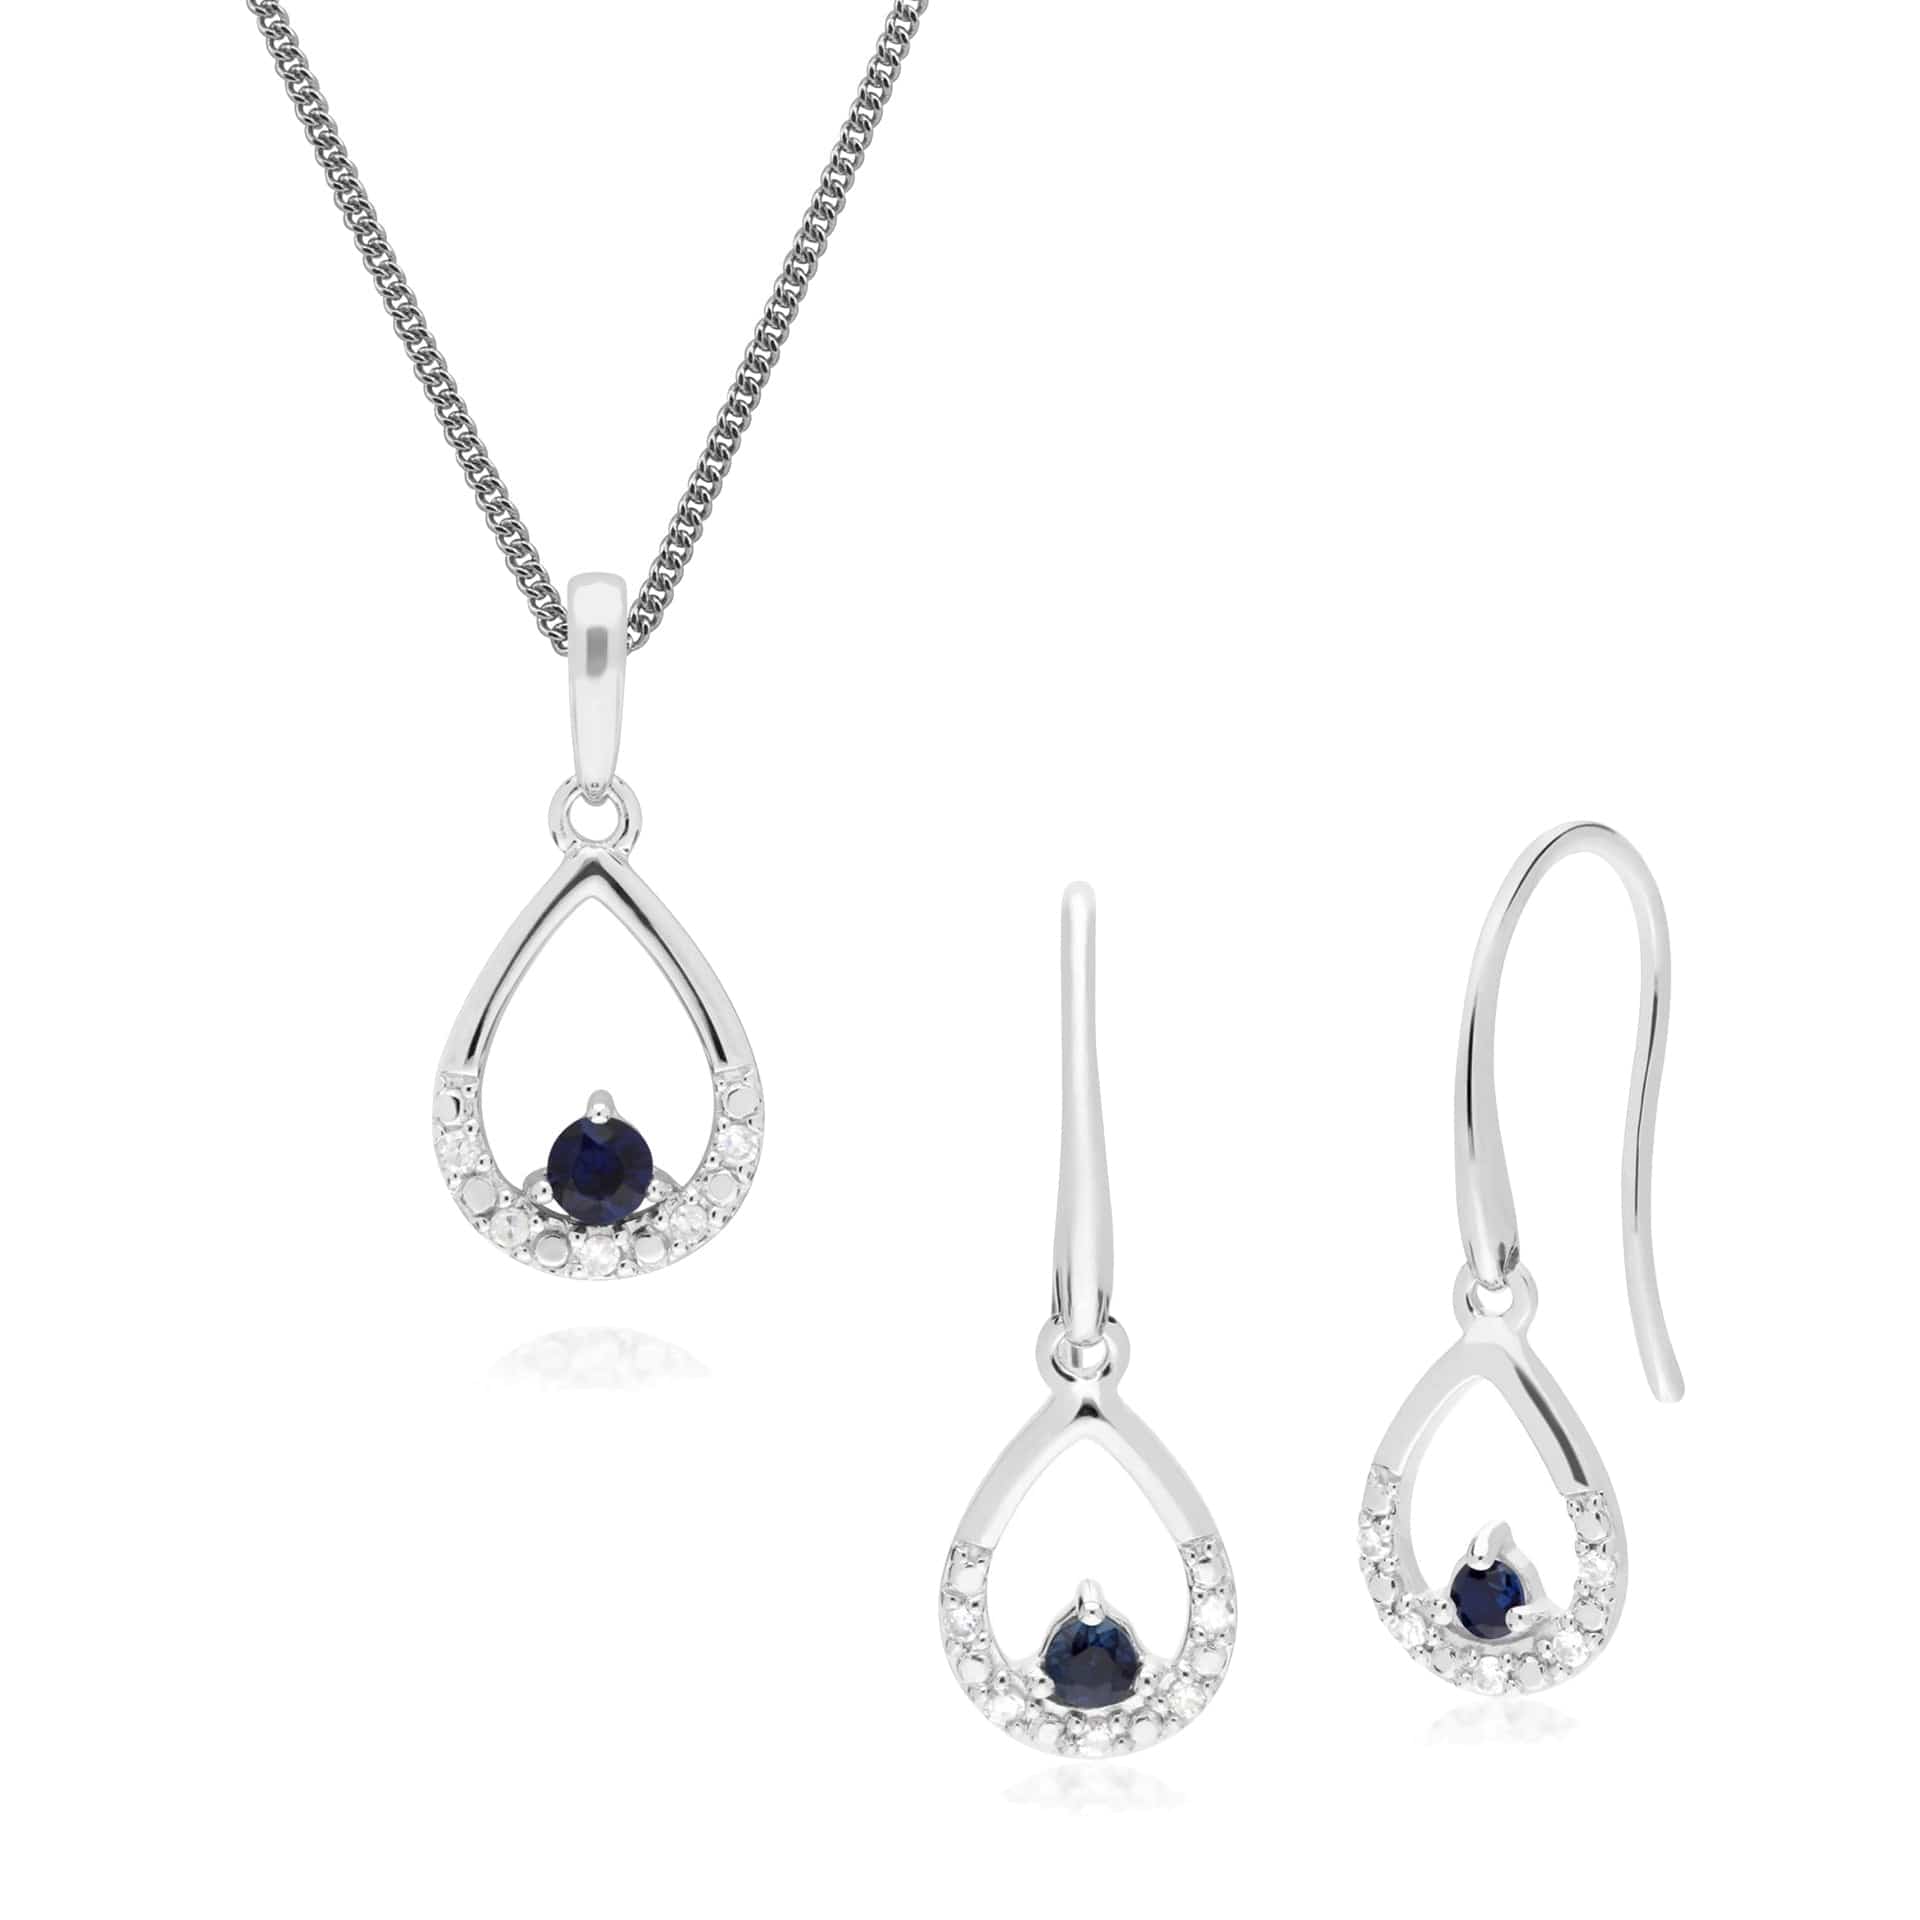 162E0259029-162P0220029 Classic Round Sapphire & Diamond Tear Drop Earrings & Pendant Set in 9ct White Gold 1